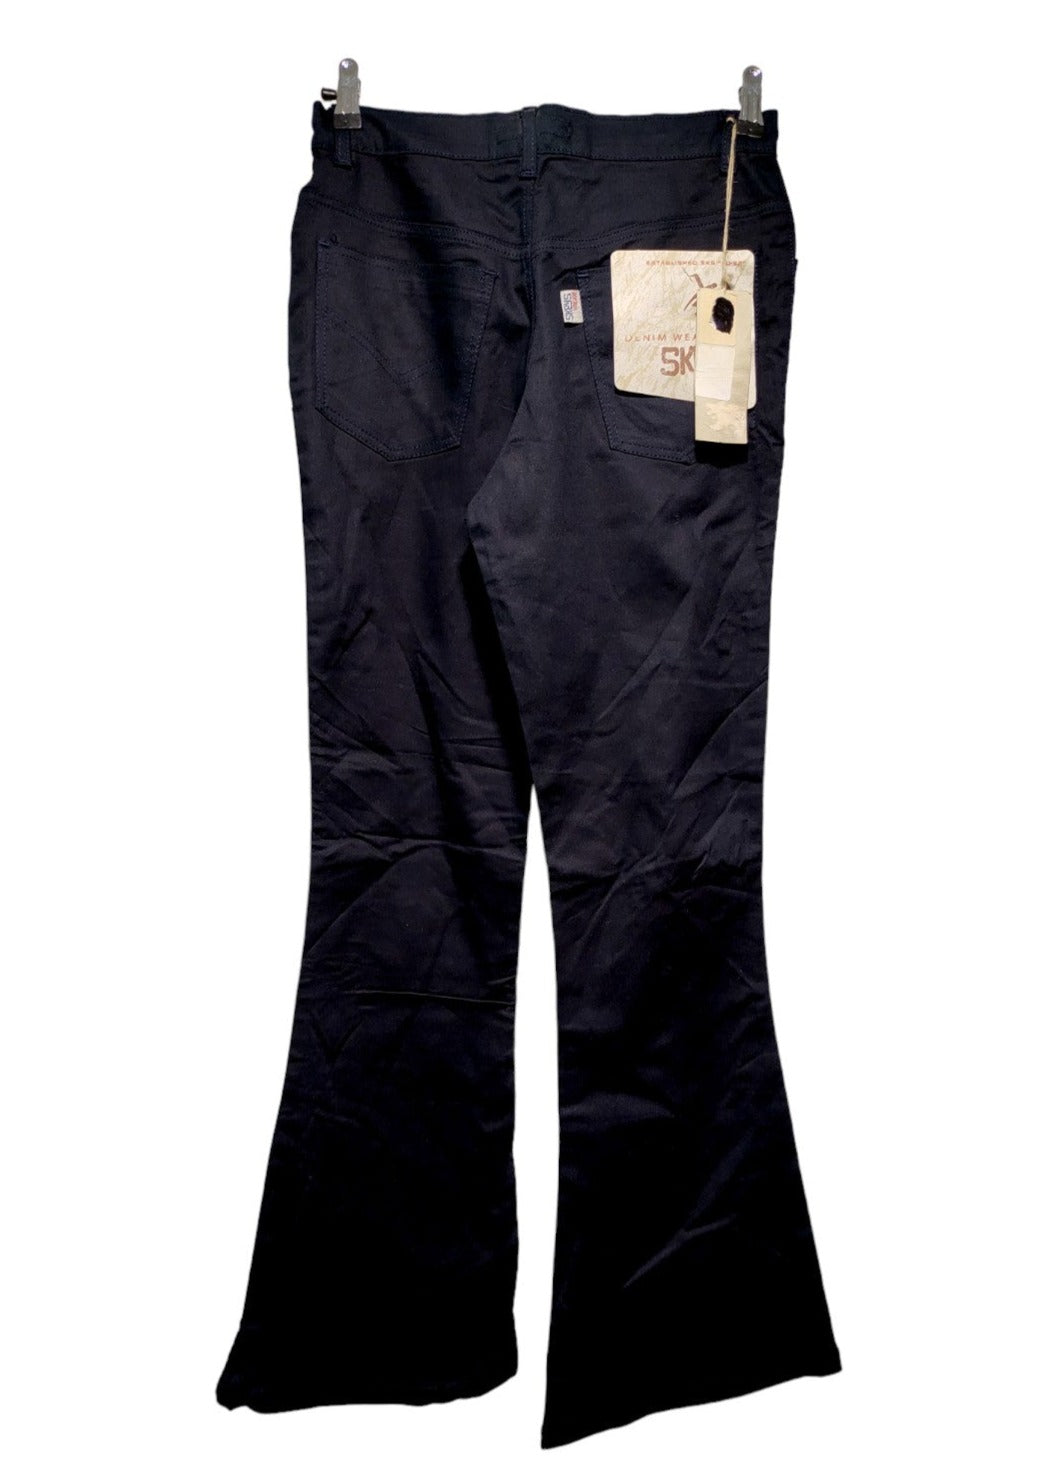 Stock, Vintage Style, Γυναικείο, Ελαστικό Tζιν Παντελόνι SKEYS σε Σκούρο Μπλε Χρώμα (Νο44-Small)